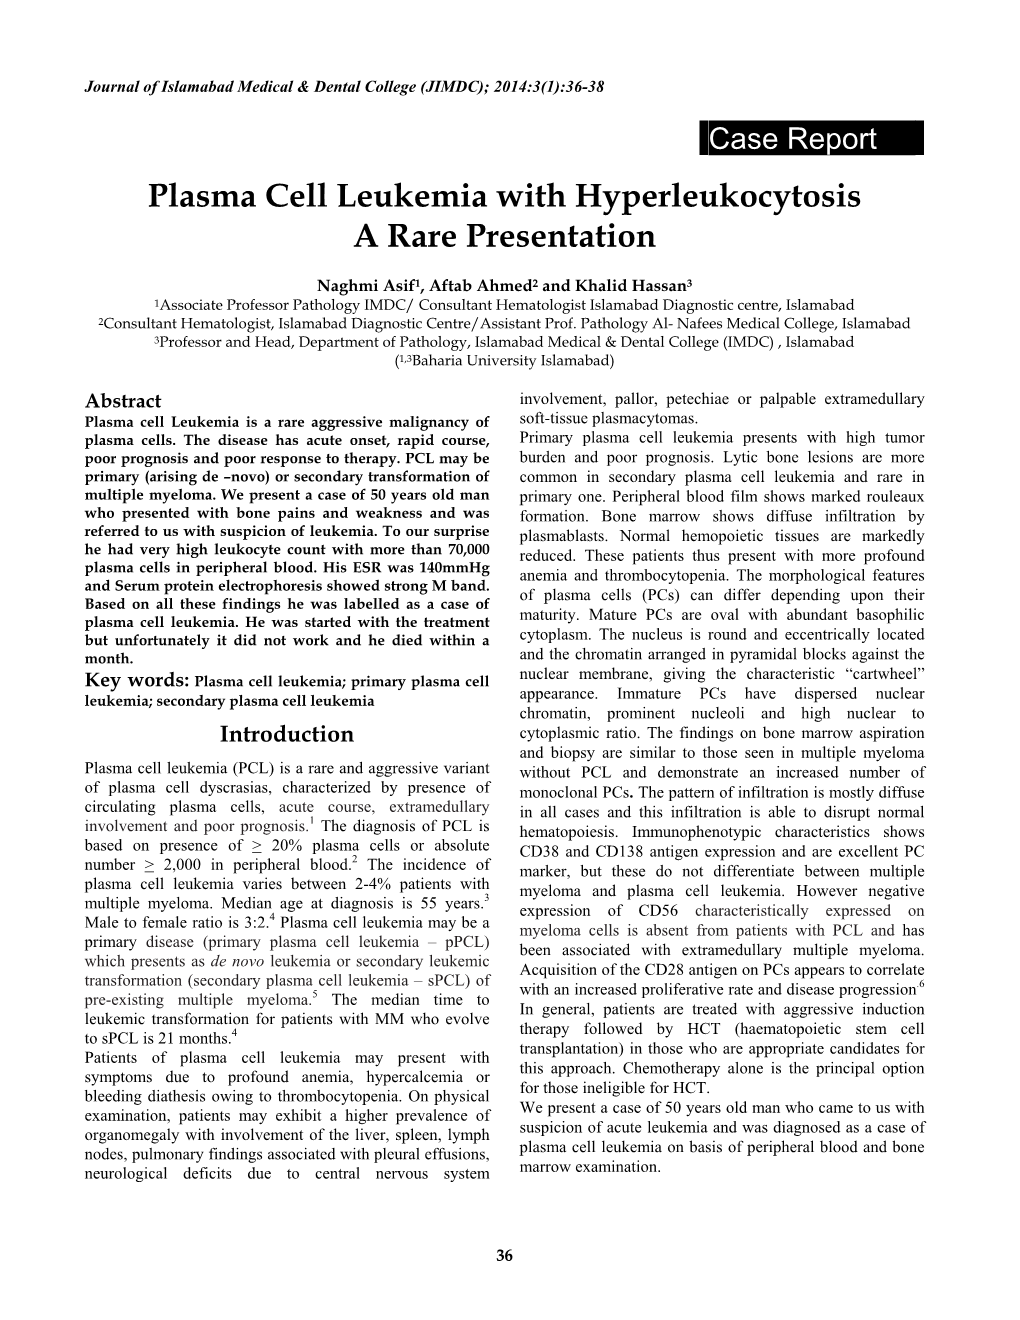 Plasma Cell Leukemia with Hyperleukocytosis a Rare Presentation